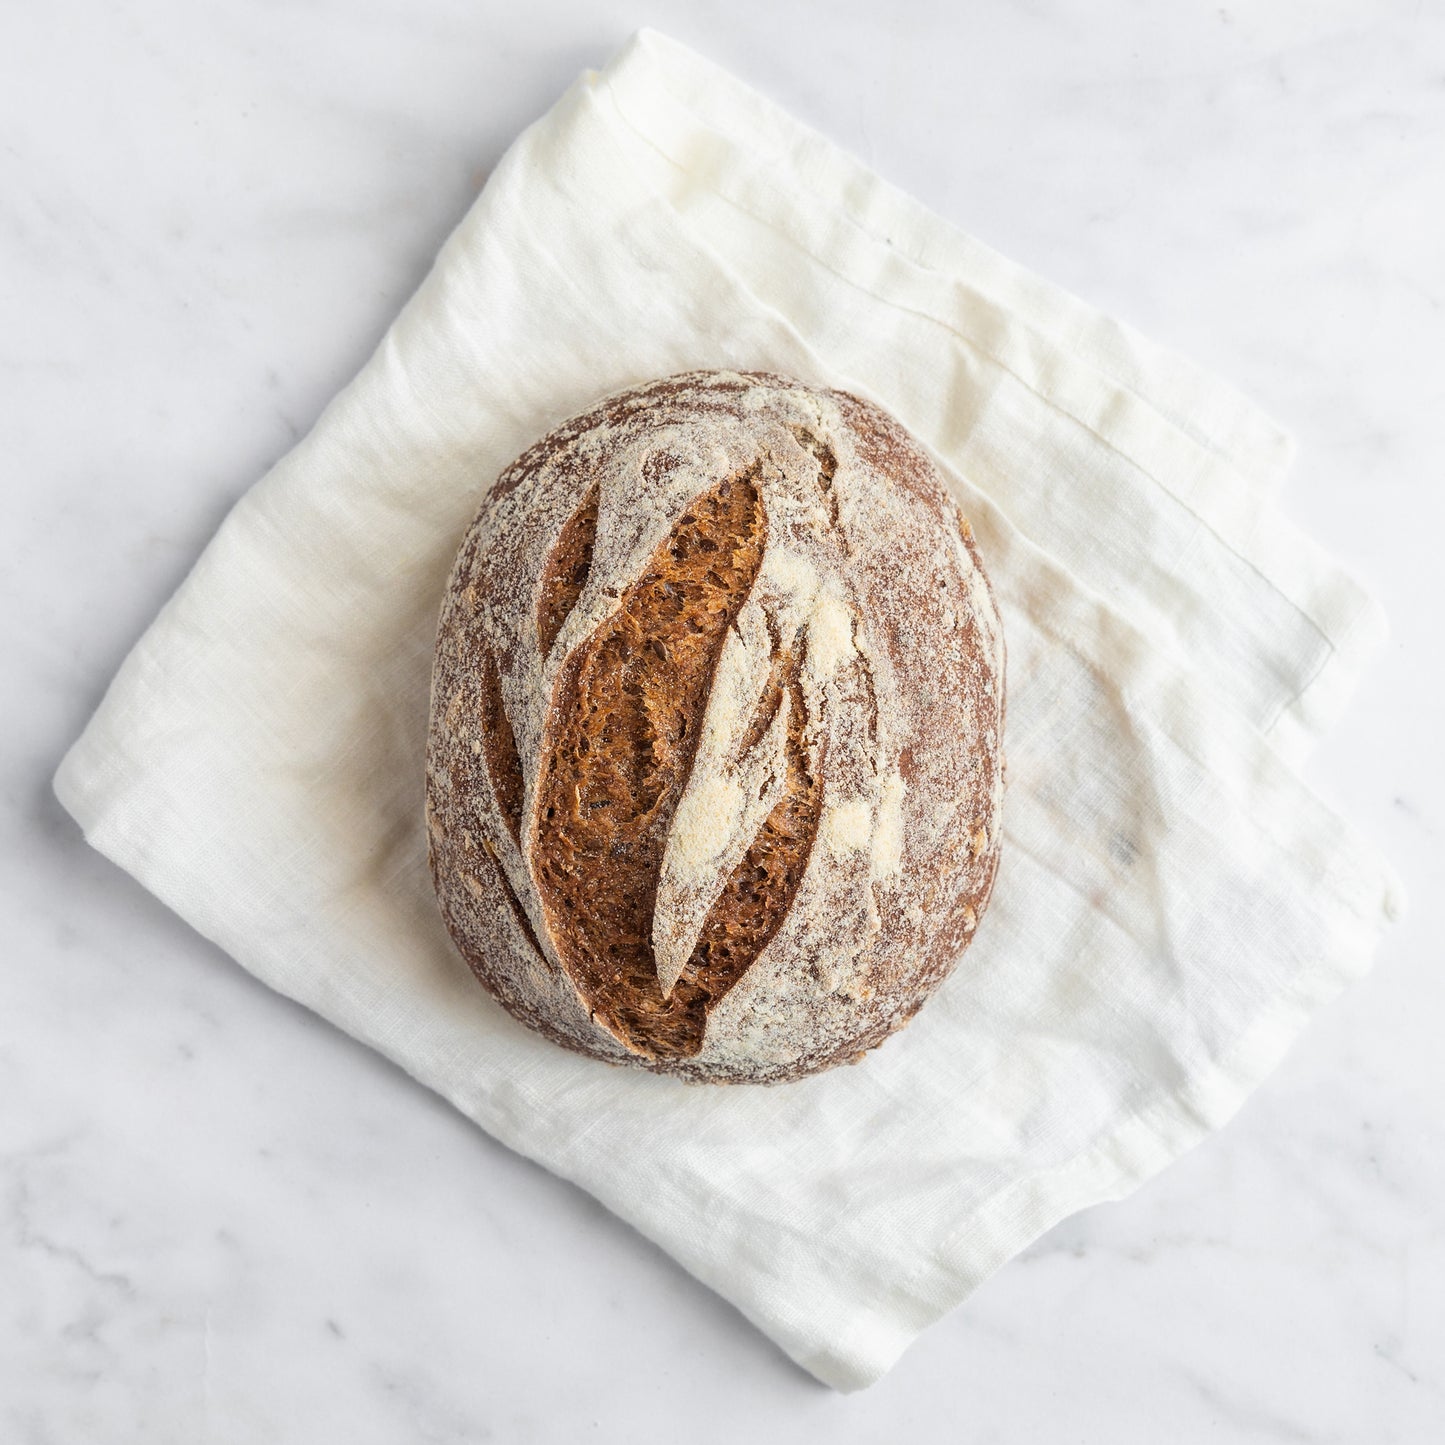 Nordic seed sourdough bread